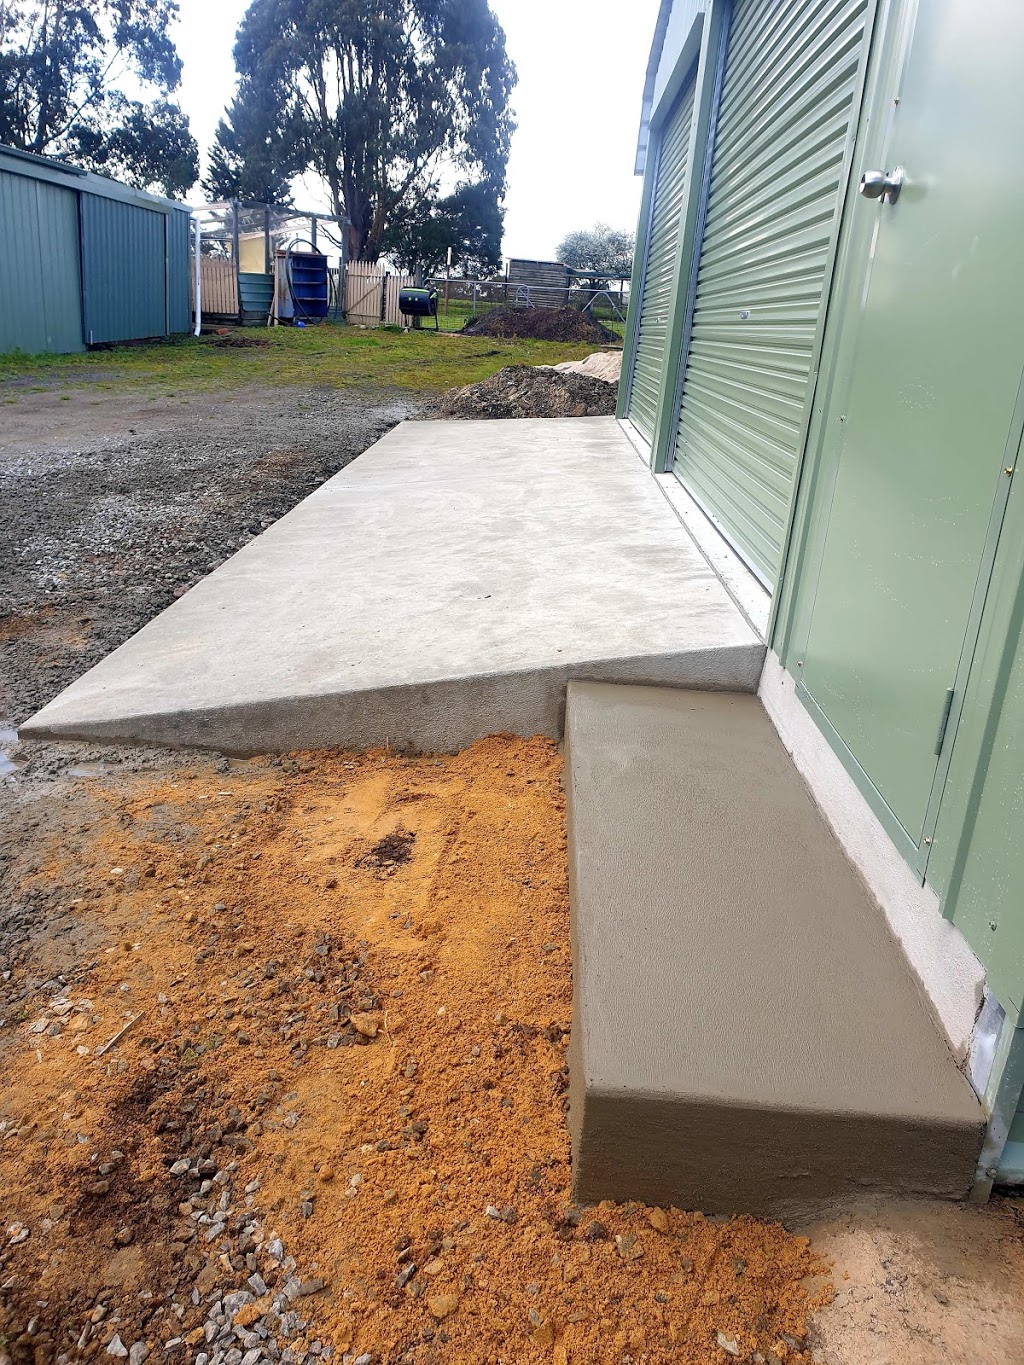 KNK Concretors | Shed 3/1 Rocla Rd, Traralgon VIC 3844, Australia | Phone: 0428 514 169